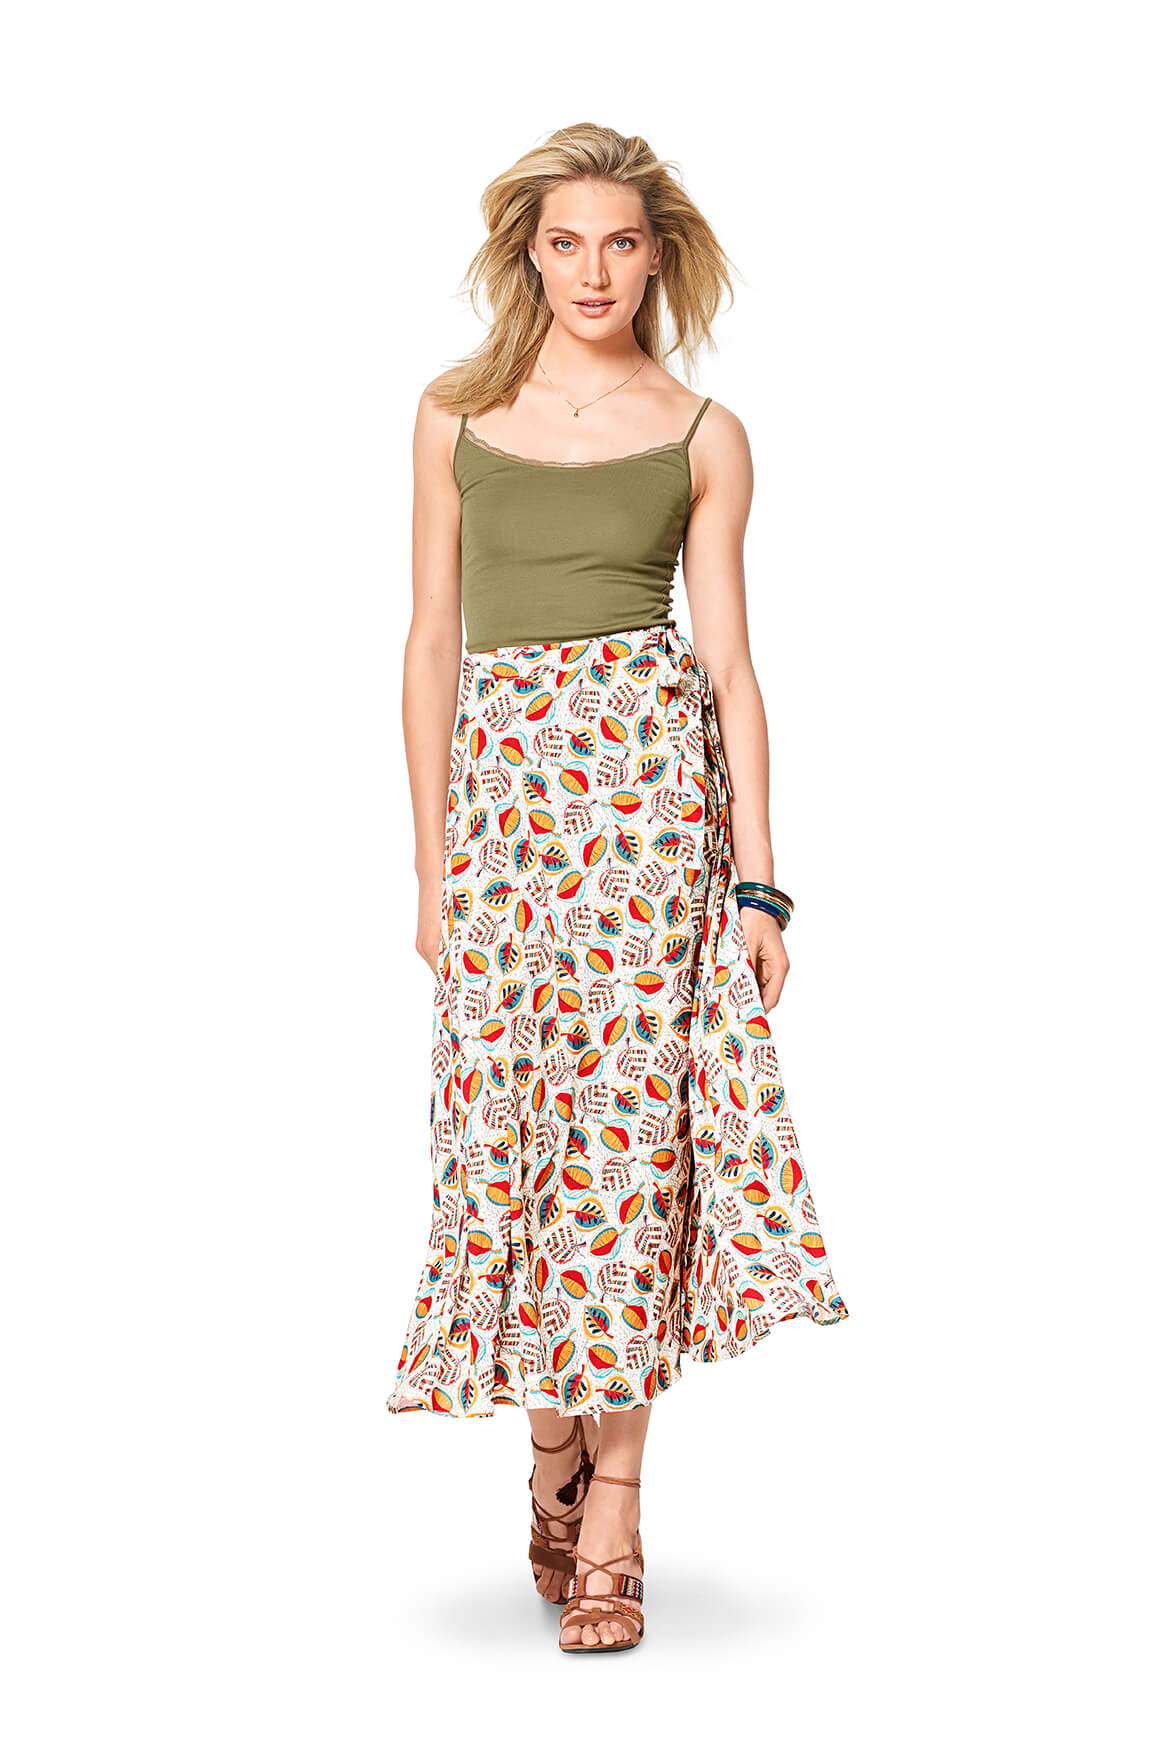 Burda Style Pattern 6340 Misses' wrap skirt